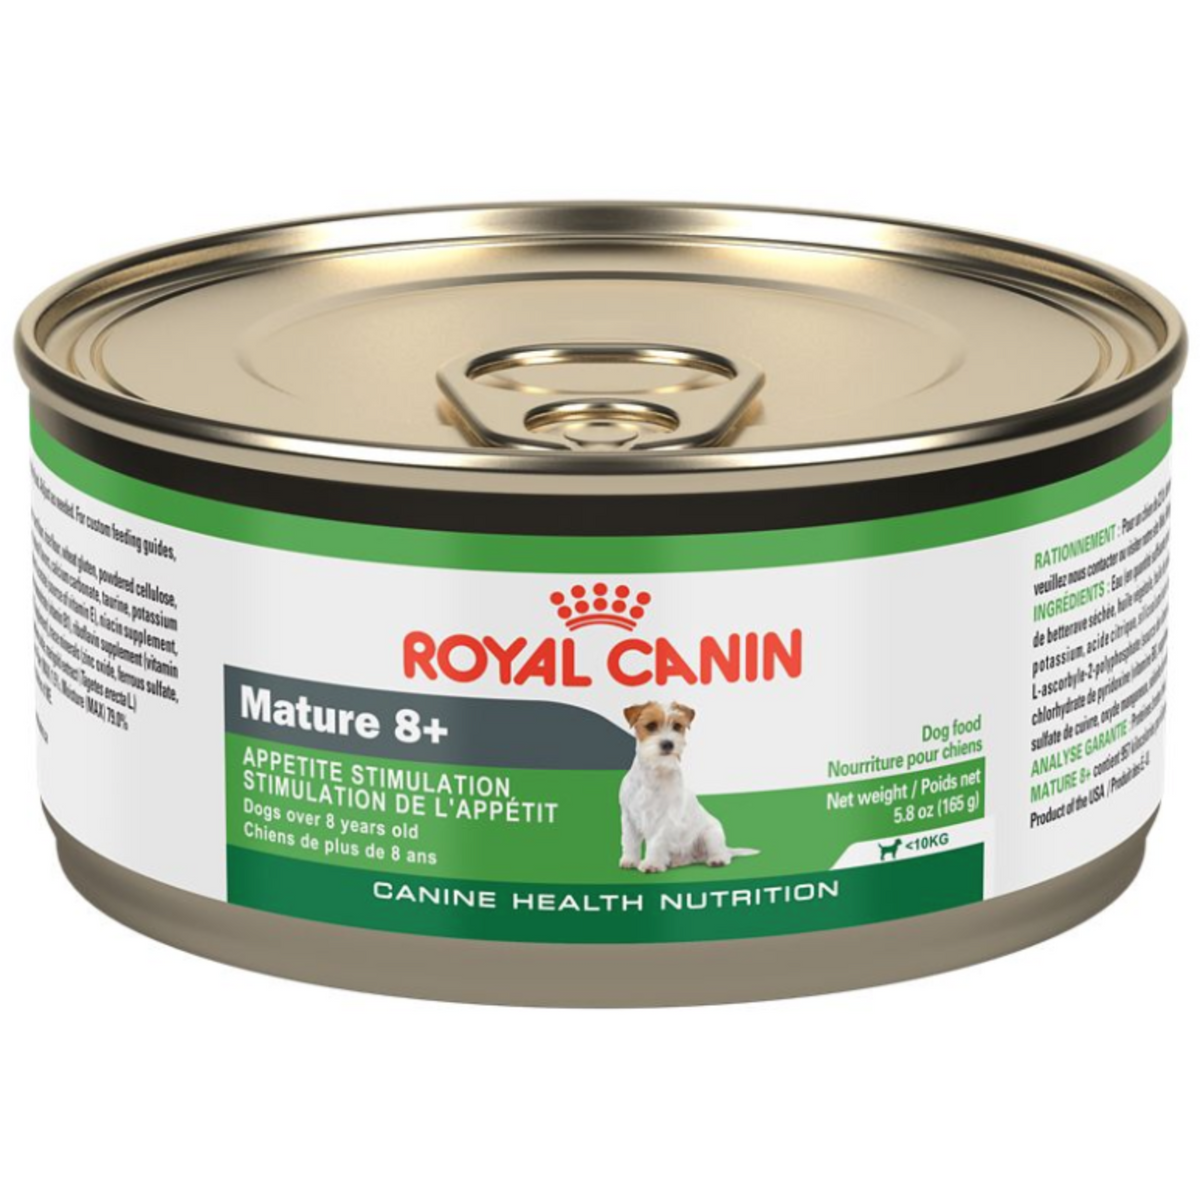 Royal Canin Mature 8+ Food - Wet Canned Dog Food (150g) - Safari Pet Center